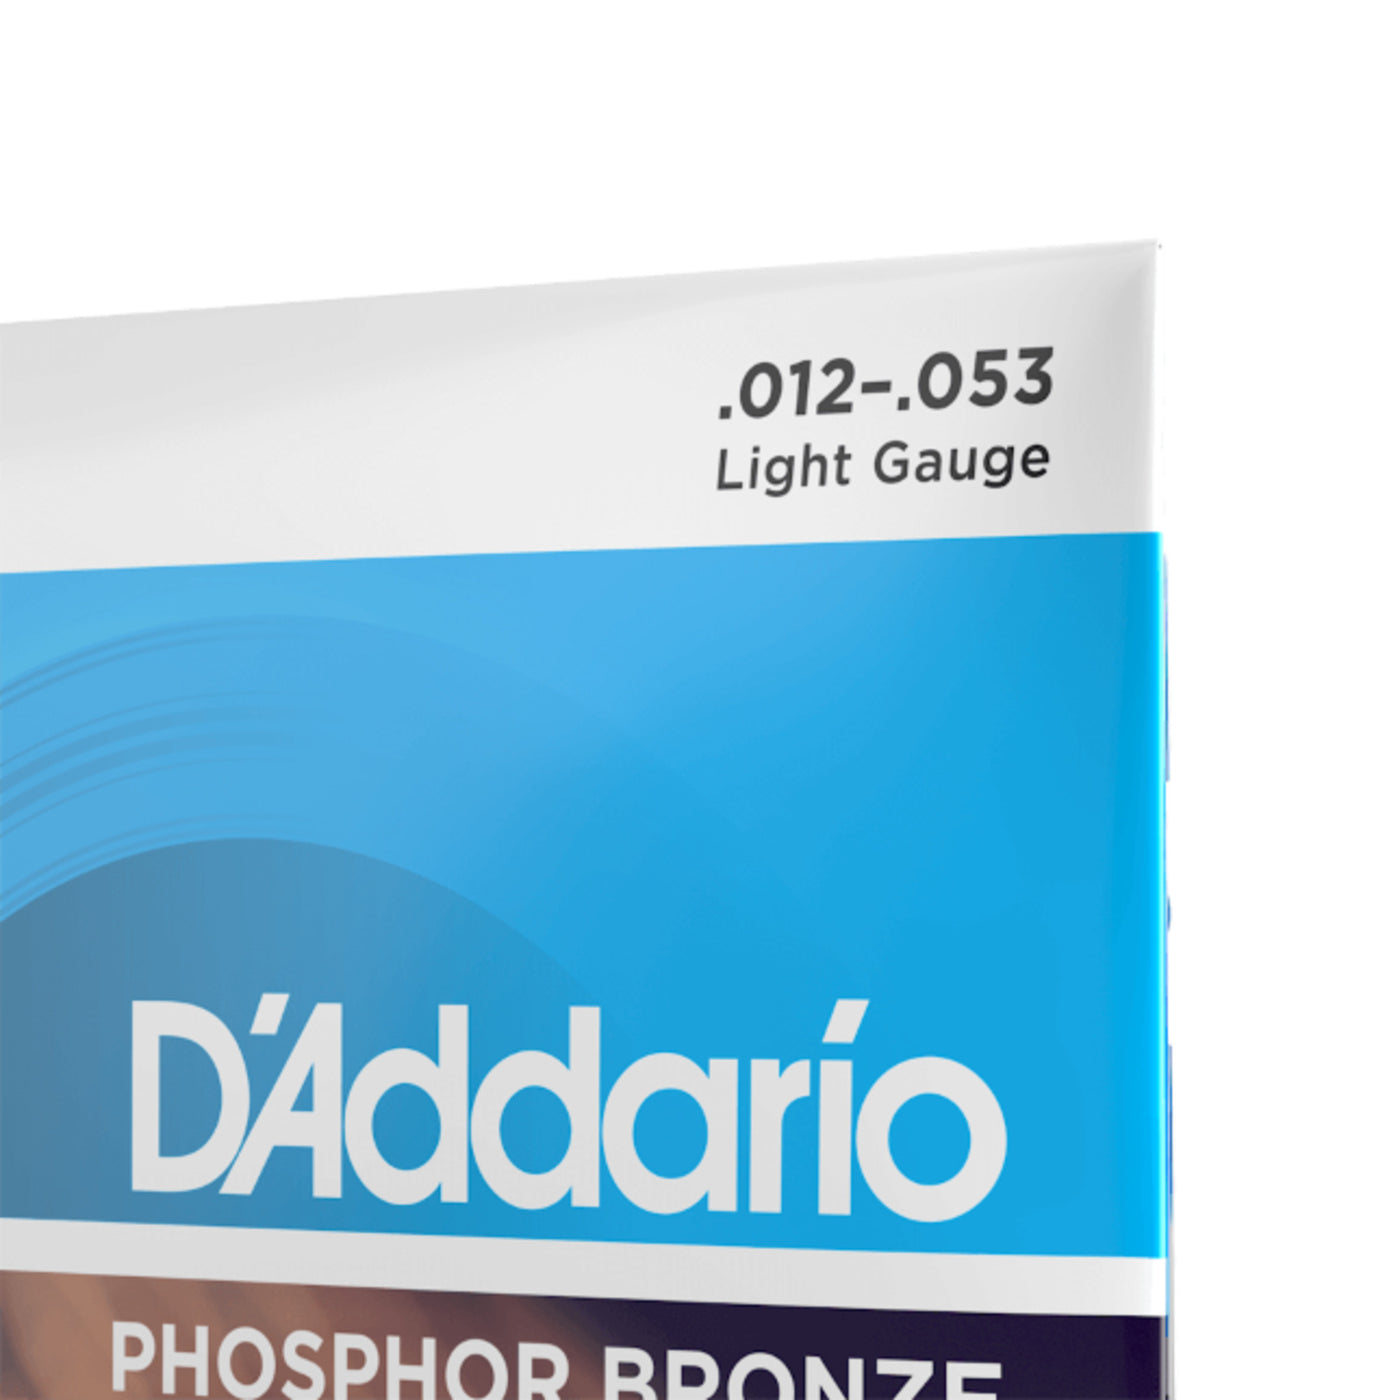 D'Addario Phosphor Bronze Acoustic Guitar Strings, Light, 12-53 (EJ16)